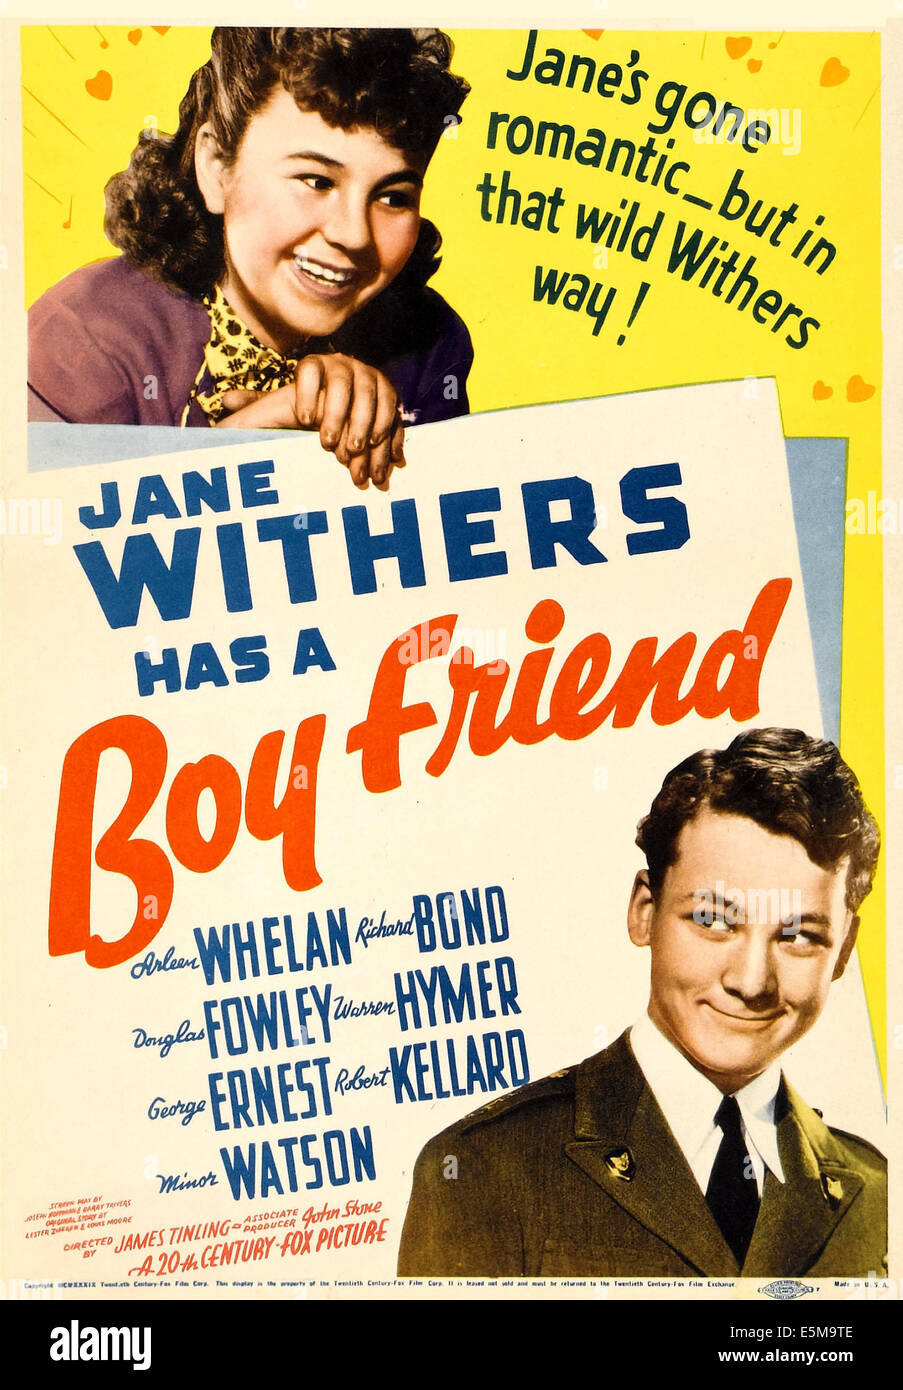 boy-friend-top-jane-withers-on-midget-wi